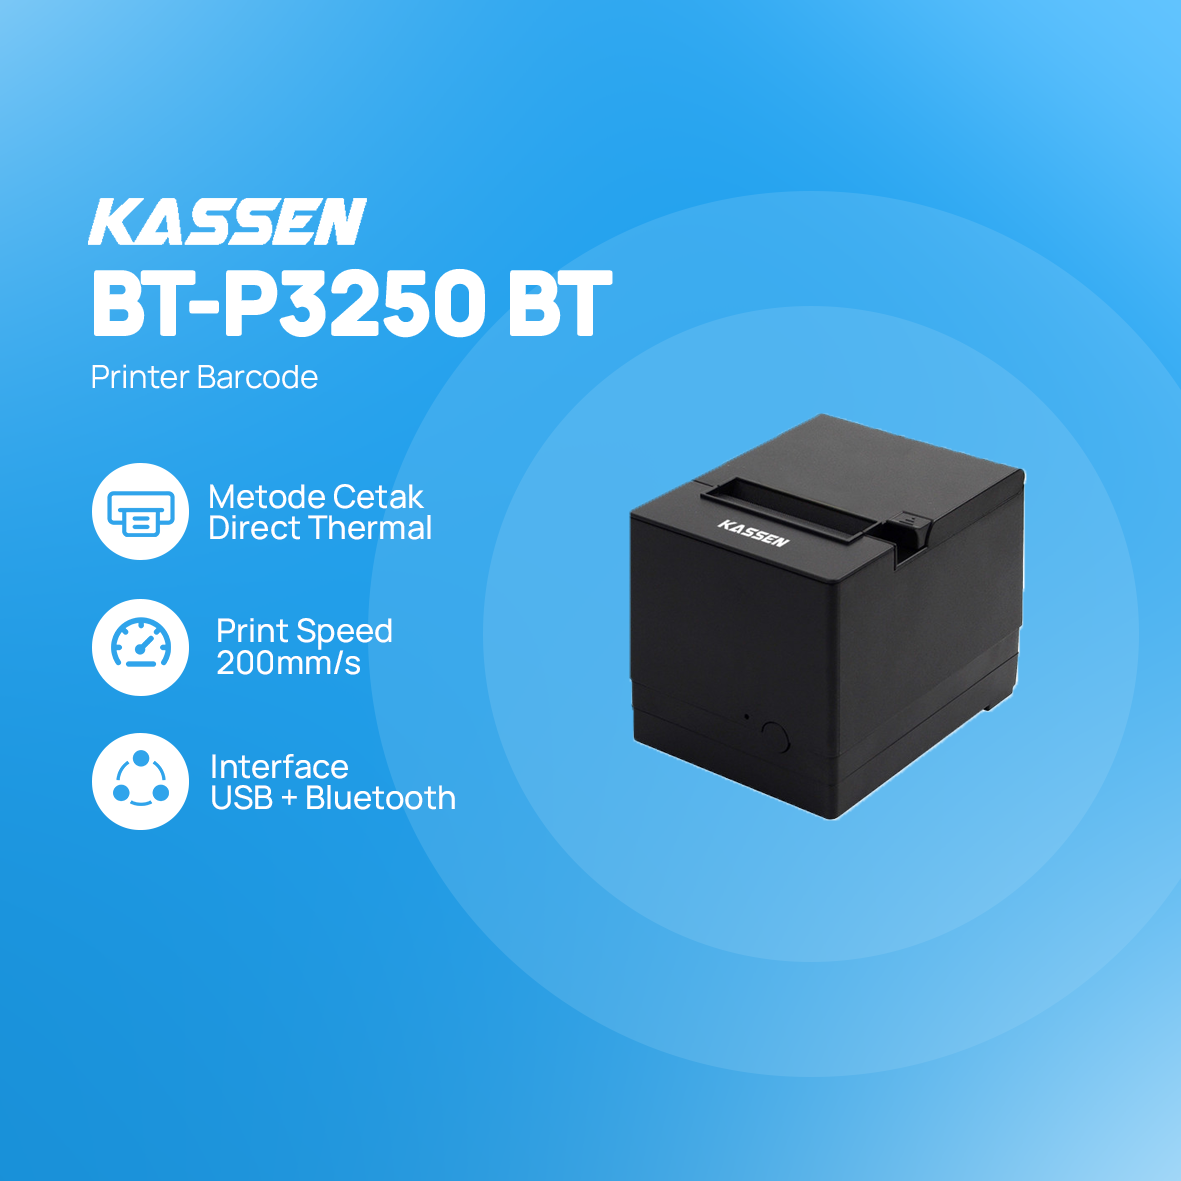 Printer Kasir Kassen BT-P3250 BT